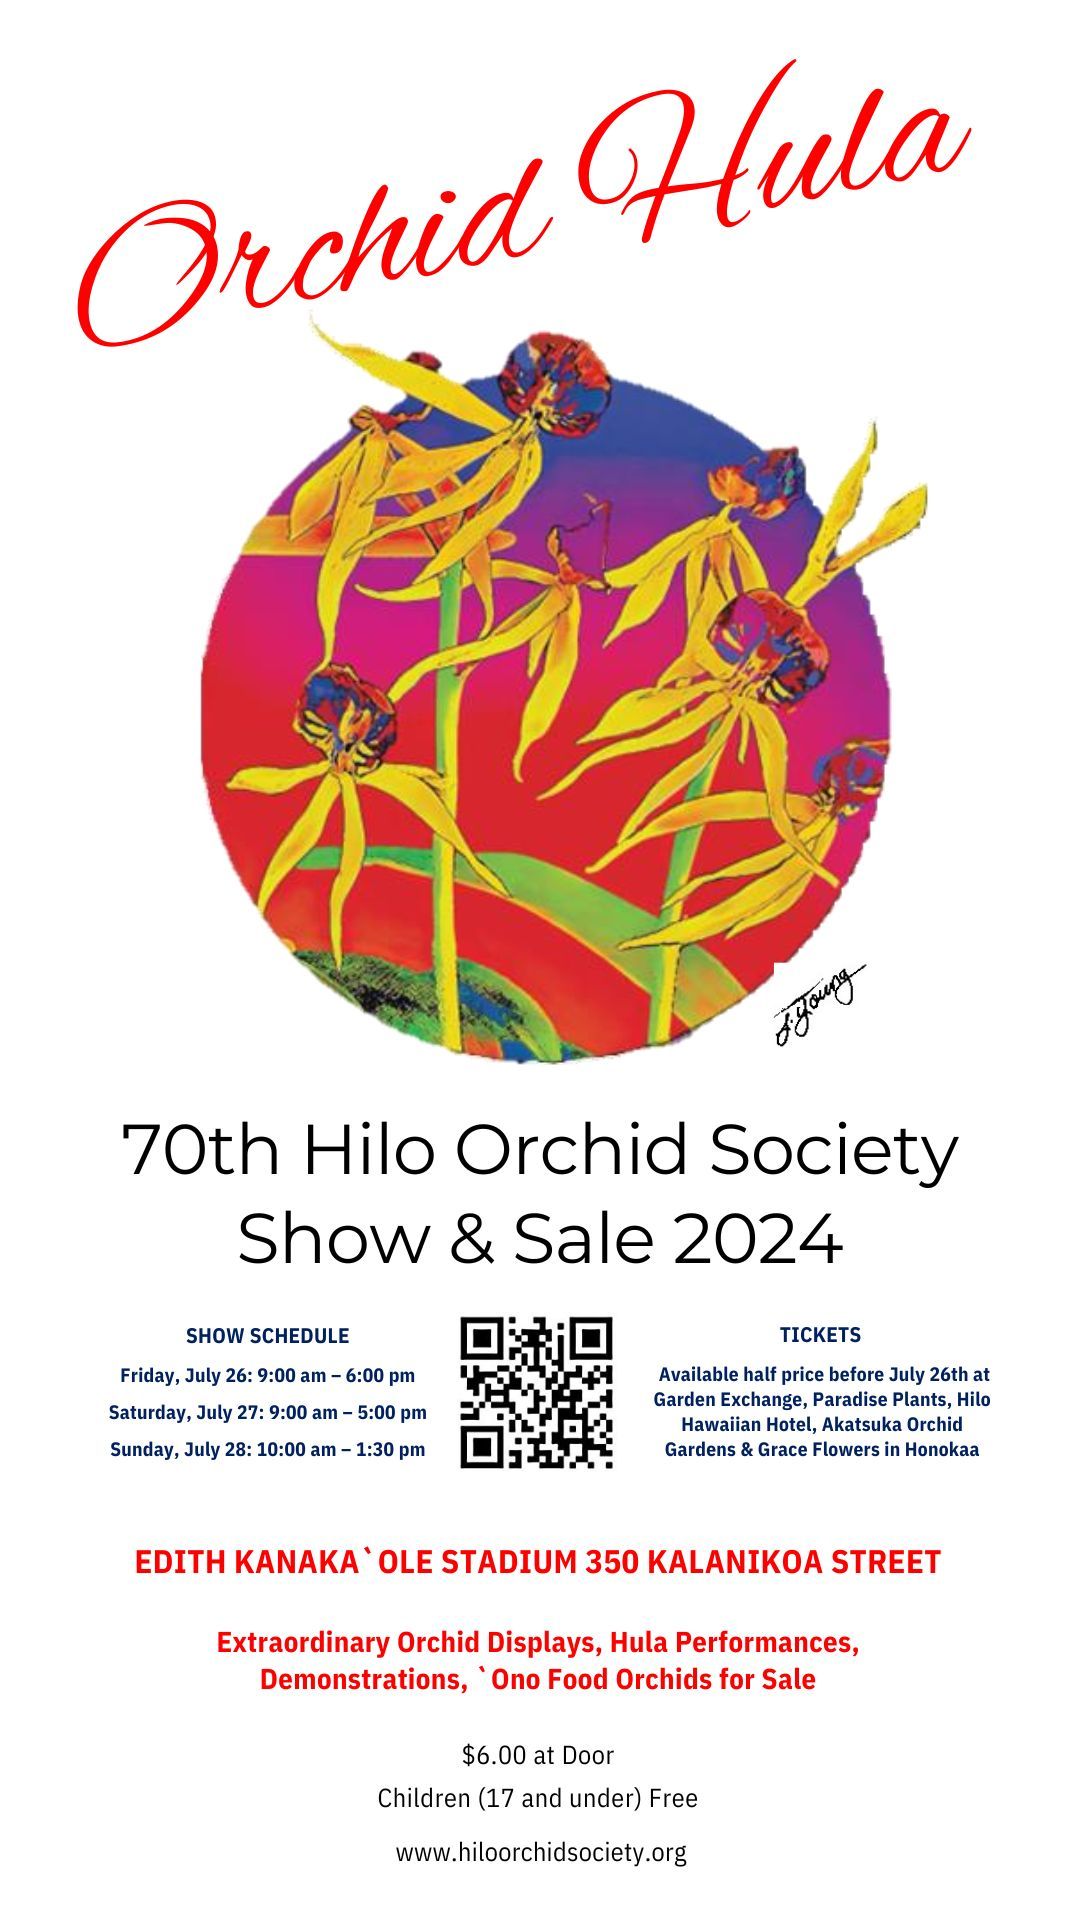 70th Orchid Show - Orchid Hula! \u2764\ufe0f